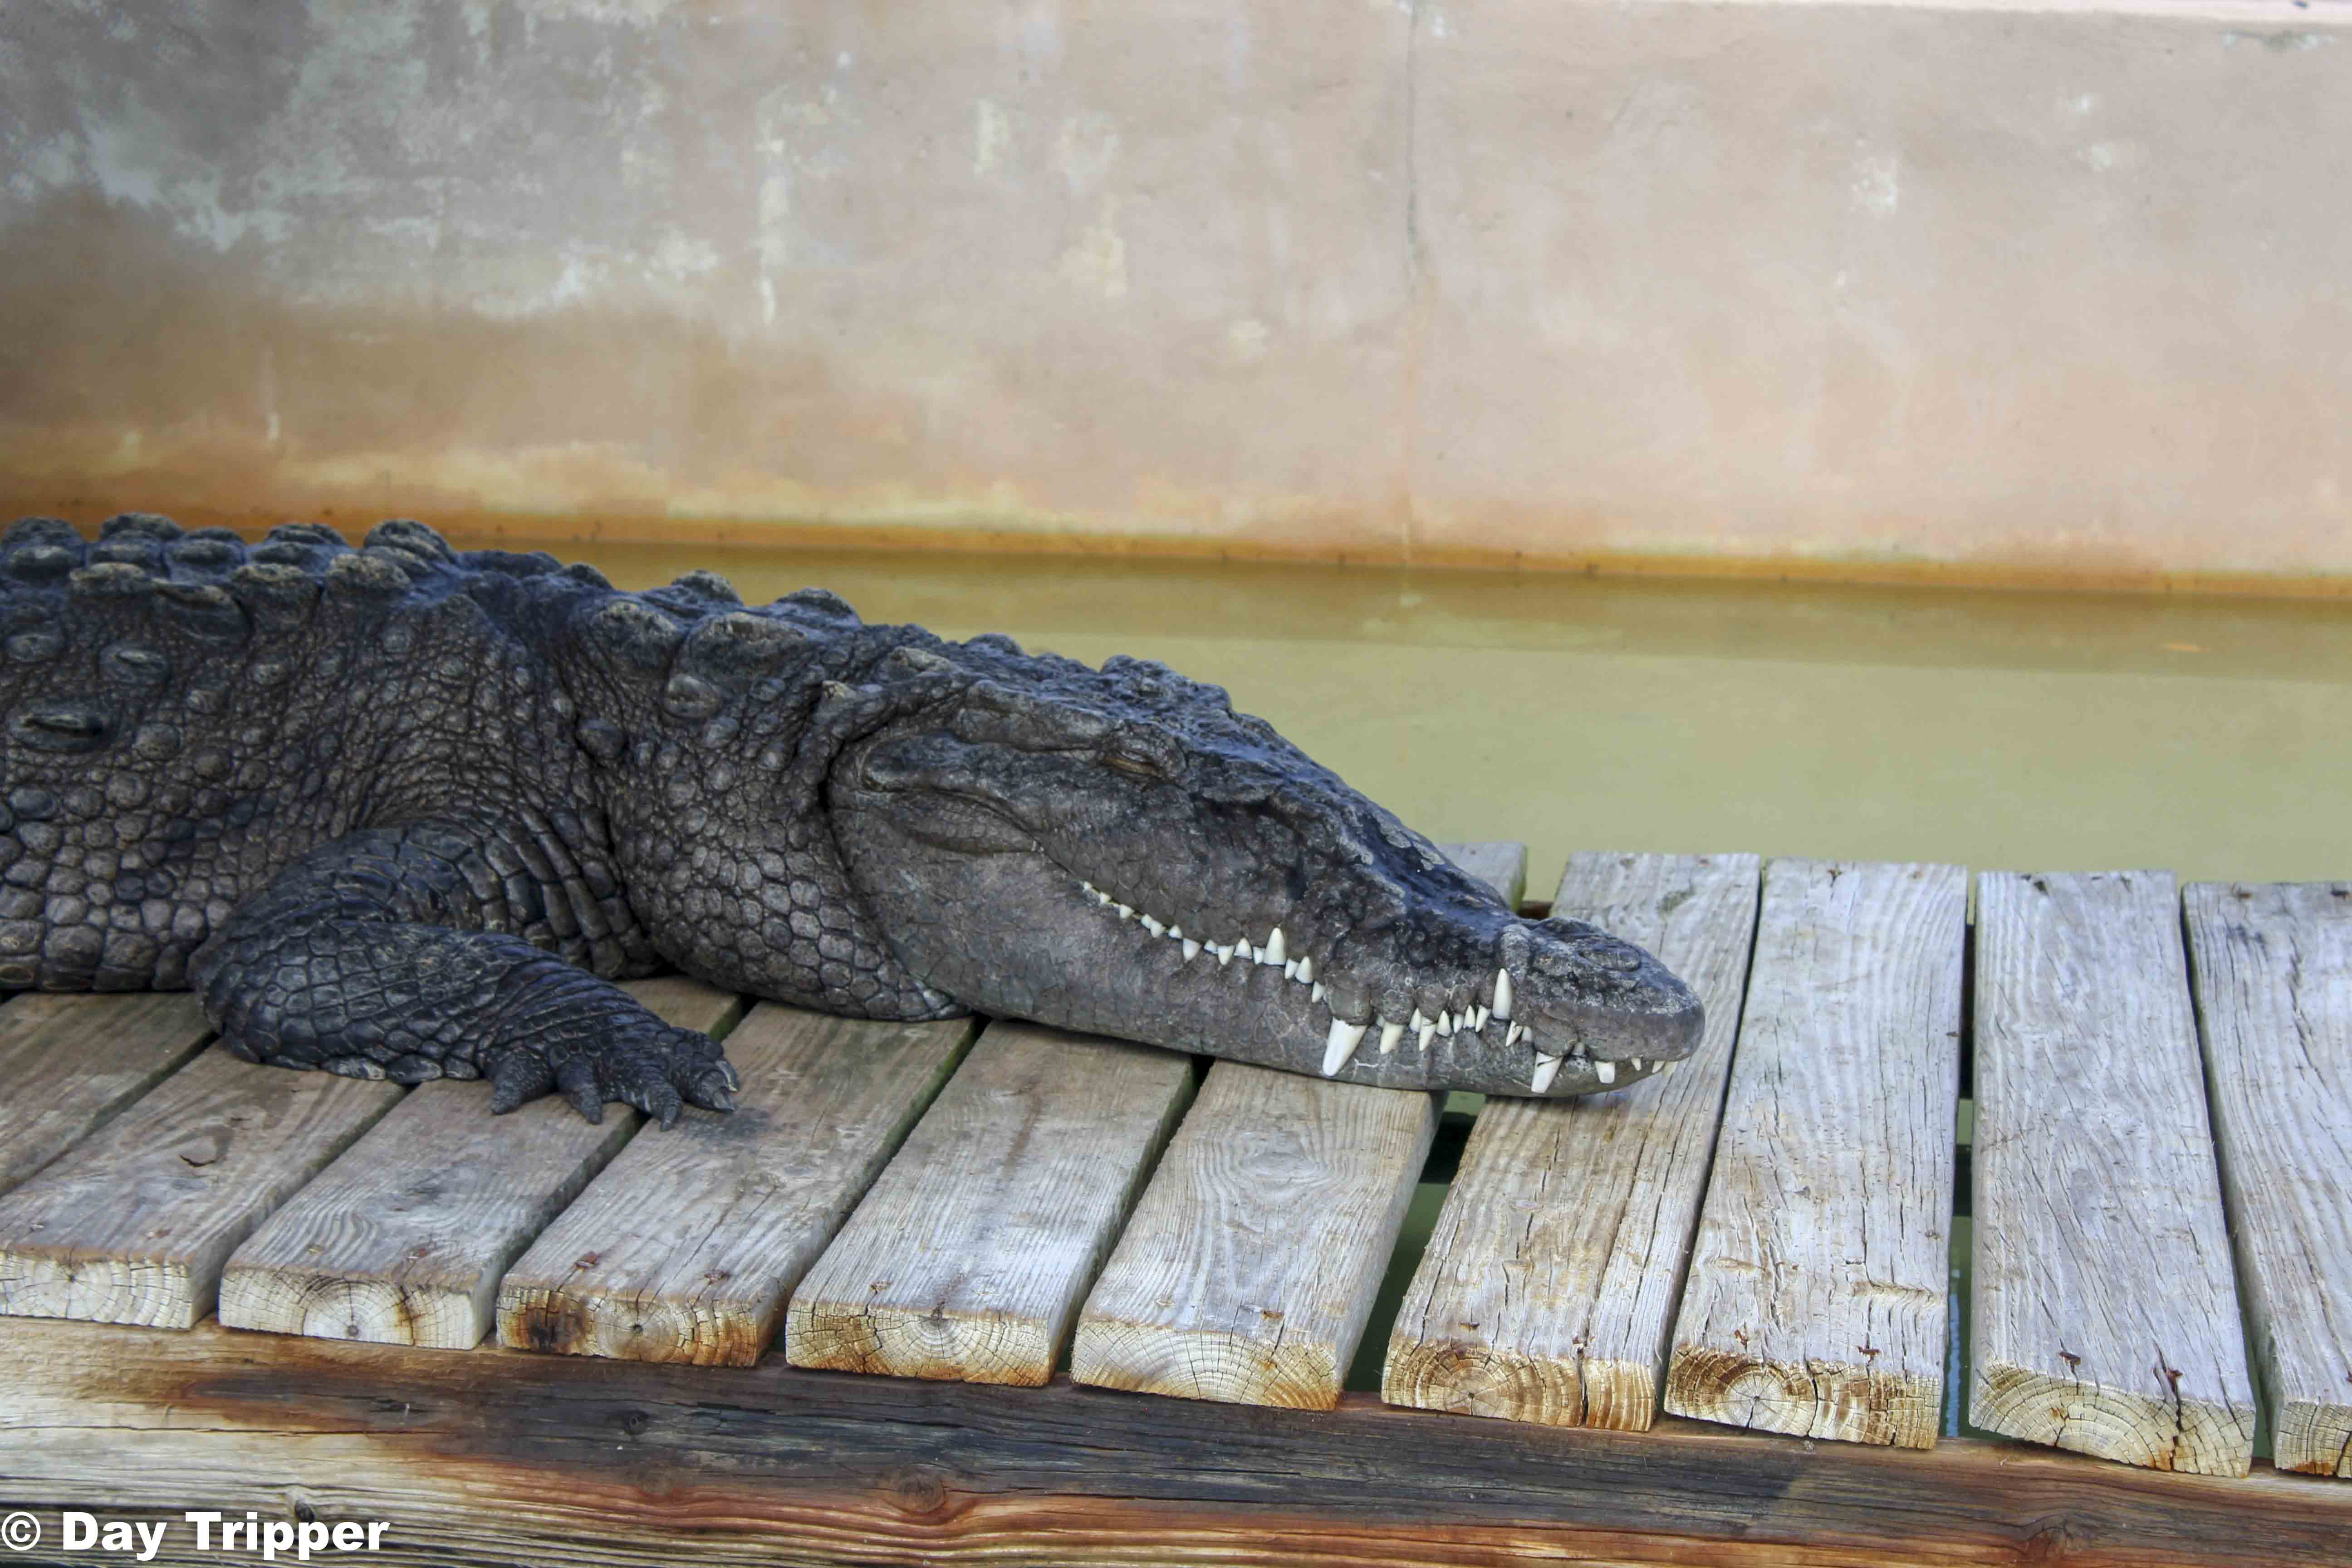 Crocodile at Captain Jacks Animal Sanctuary